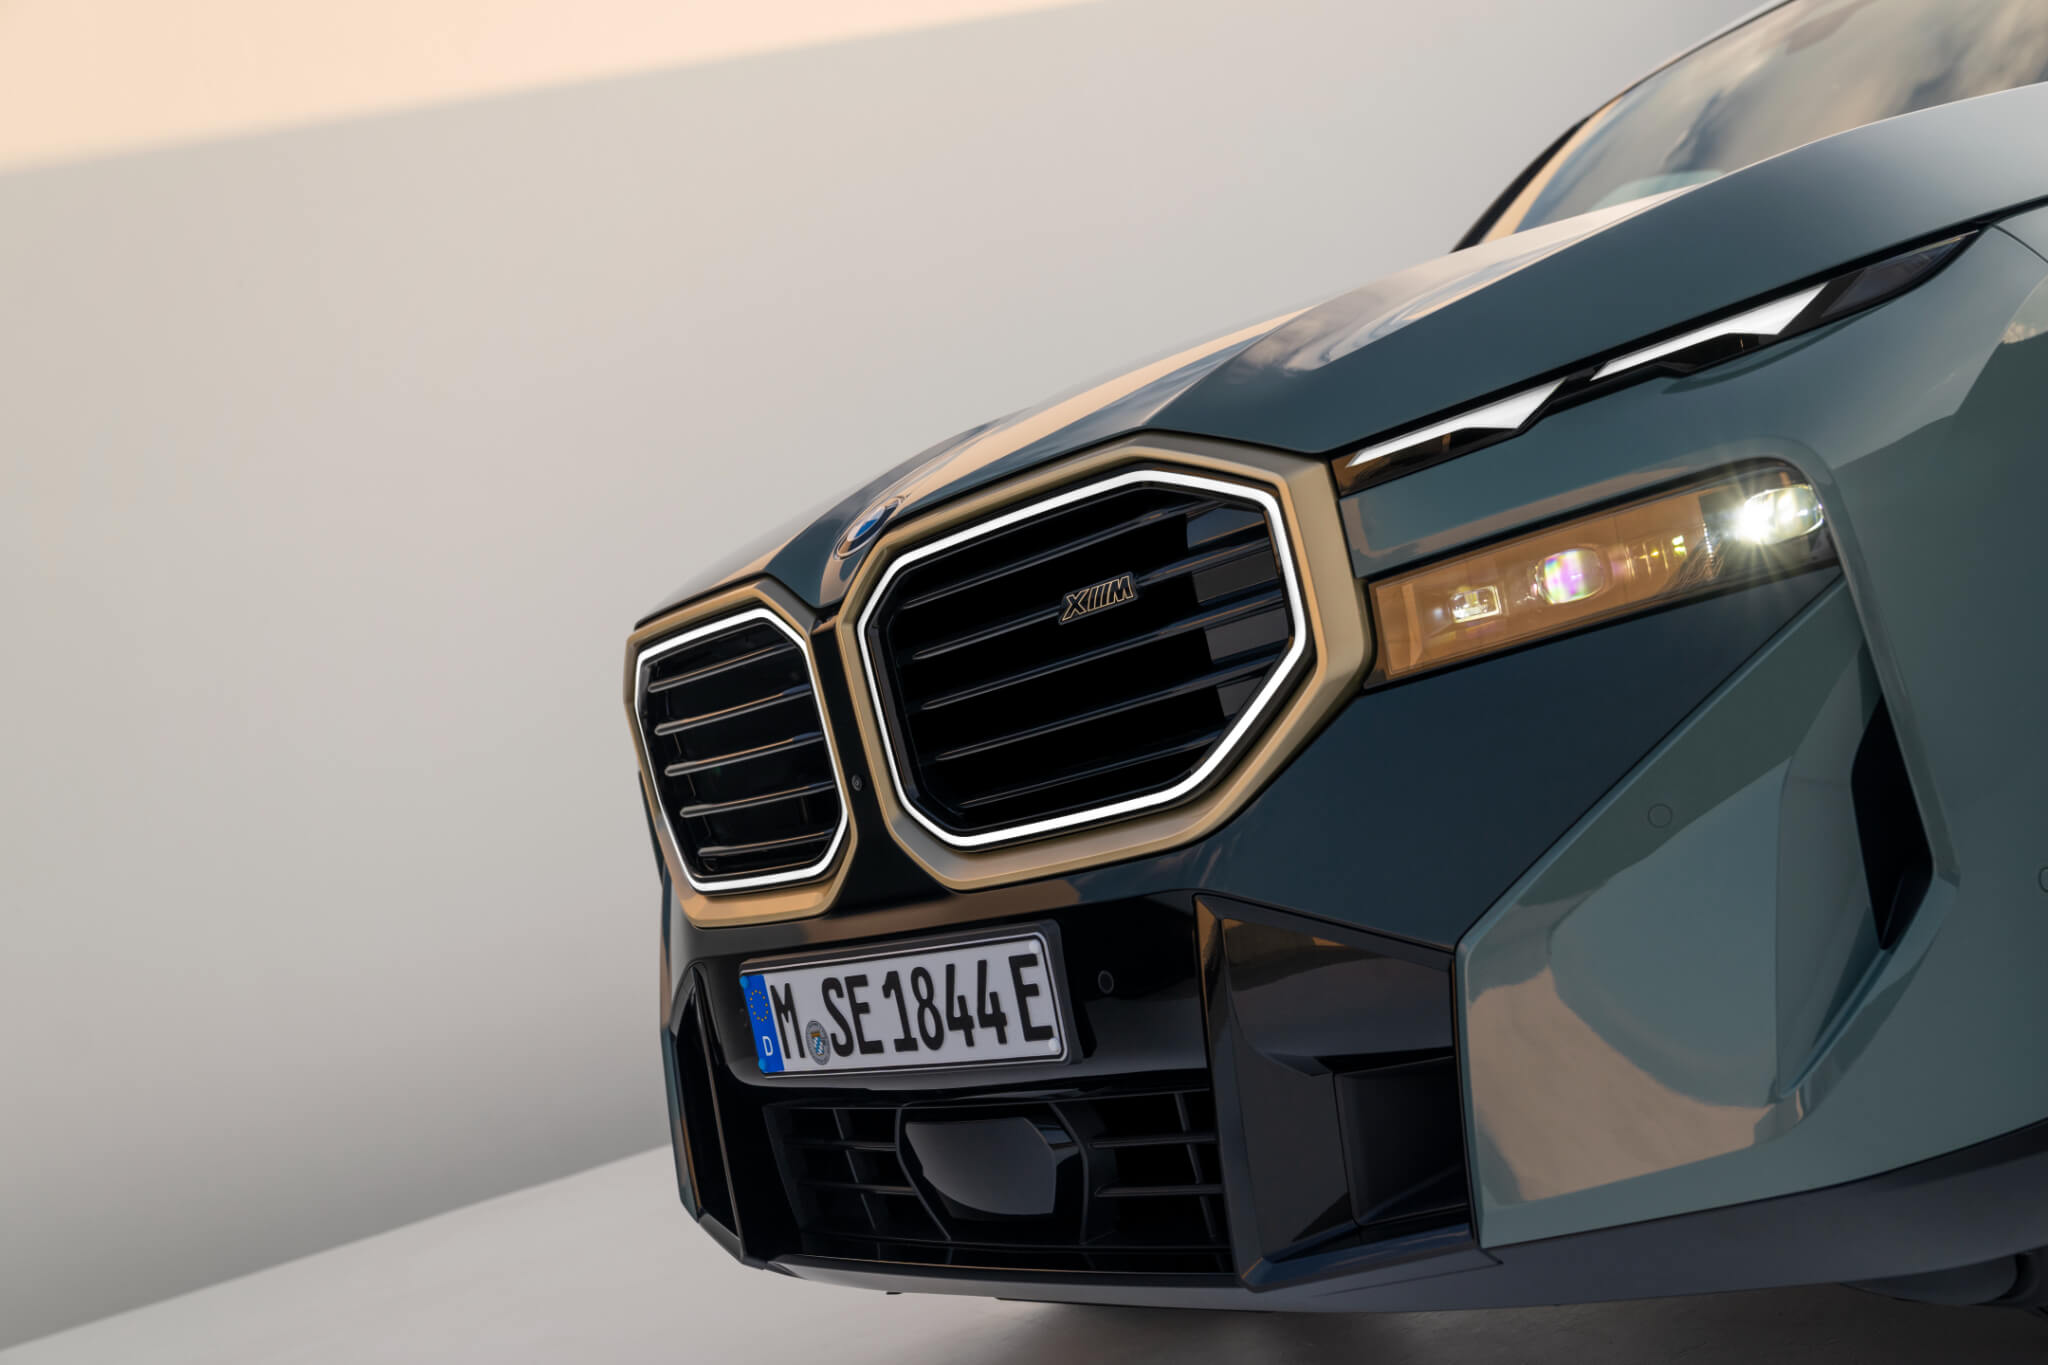 BMW XM pormenor grelha